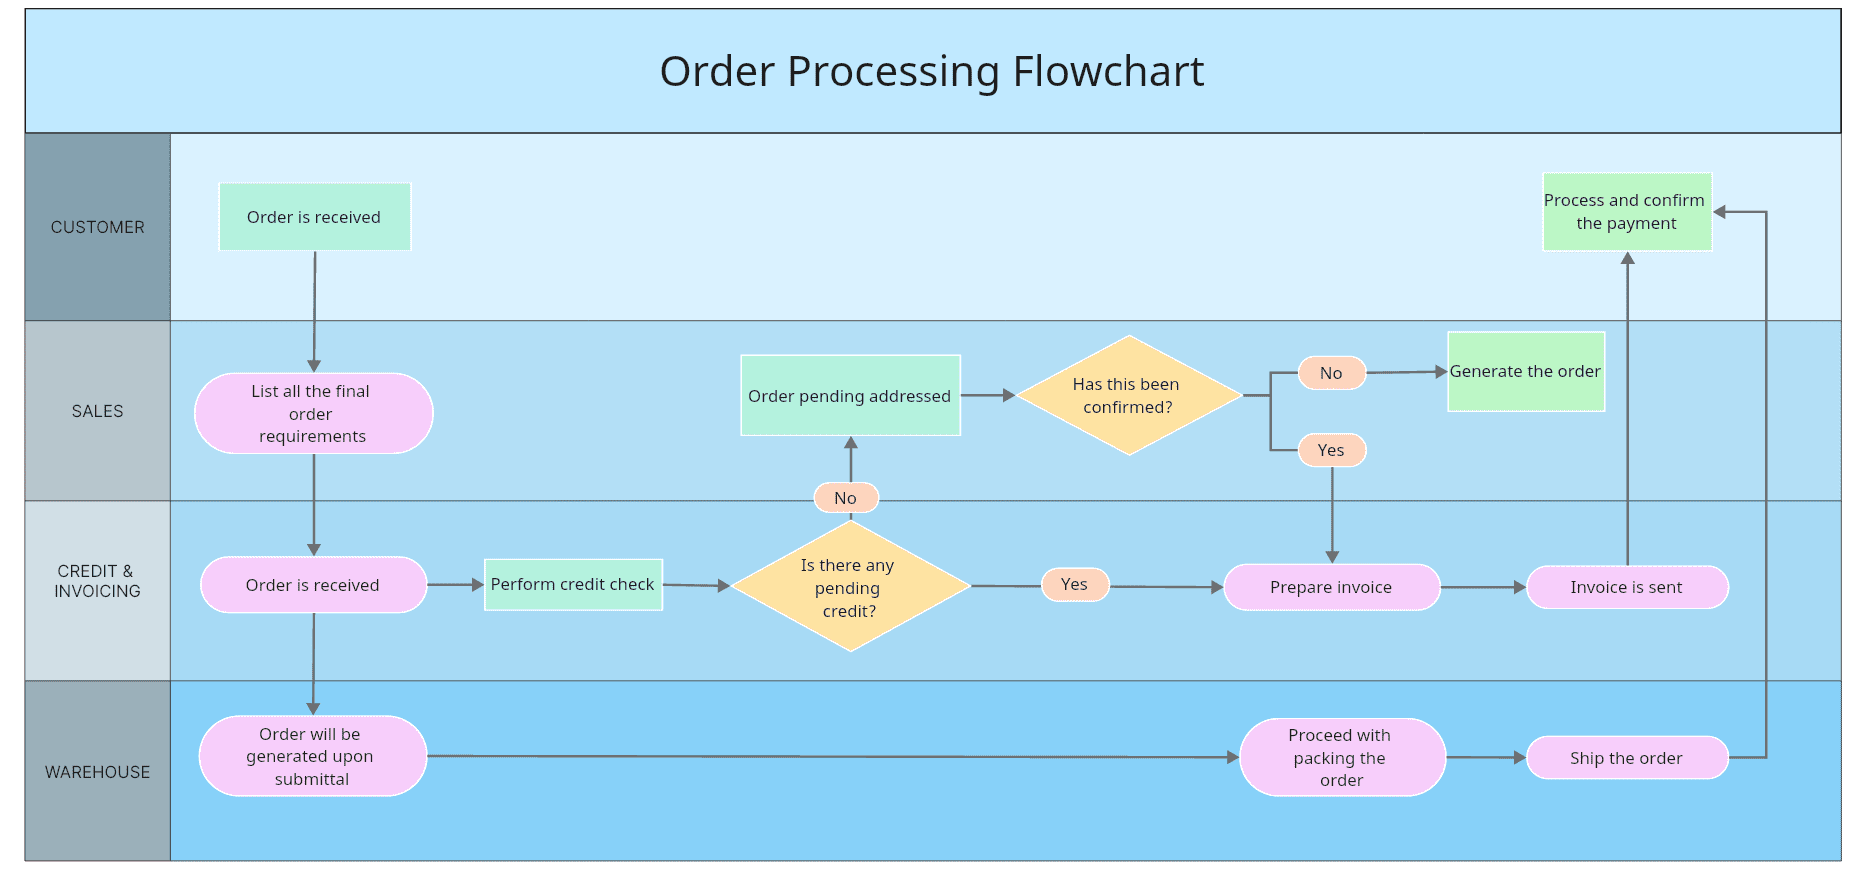 1. Order processing flowchart